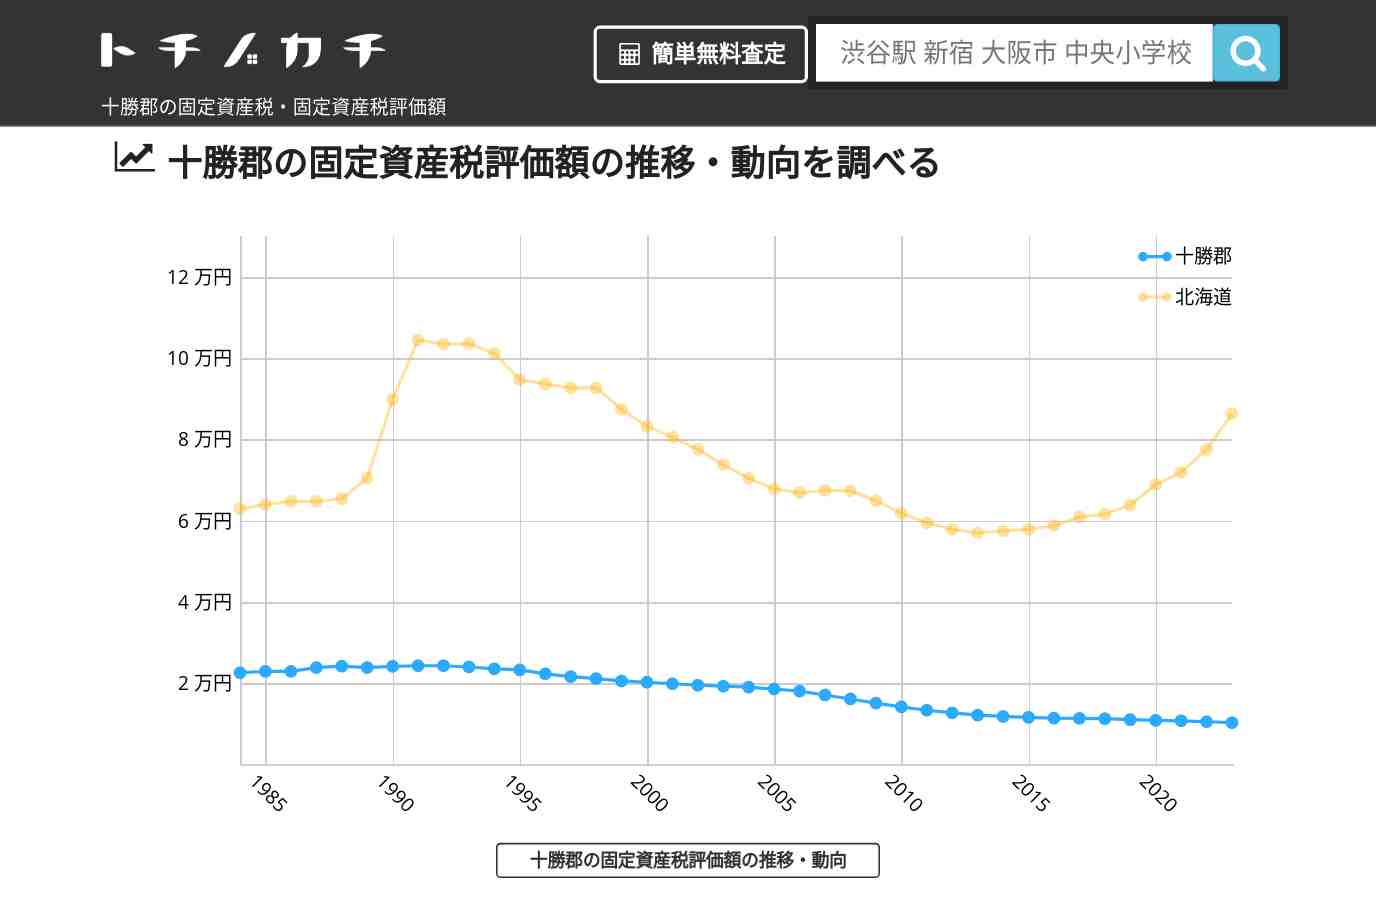 十勝郡(北海道)の固定資産税・固定資産税評価額 | トチノカチ